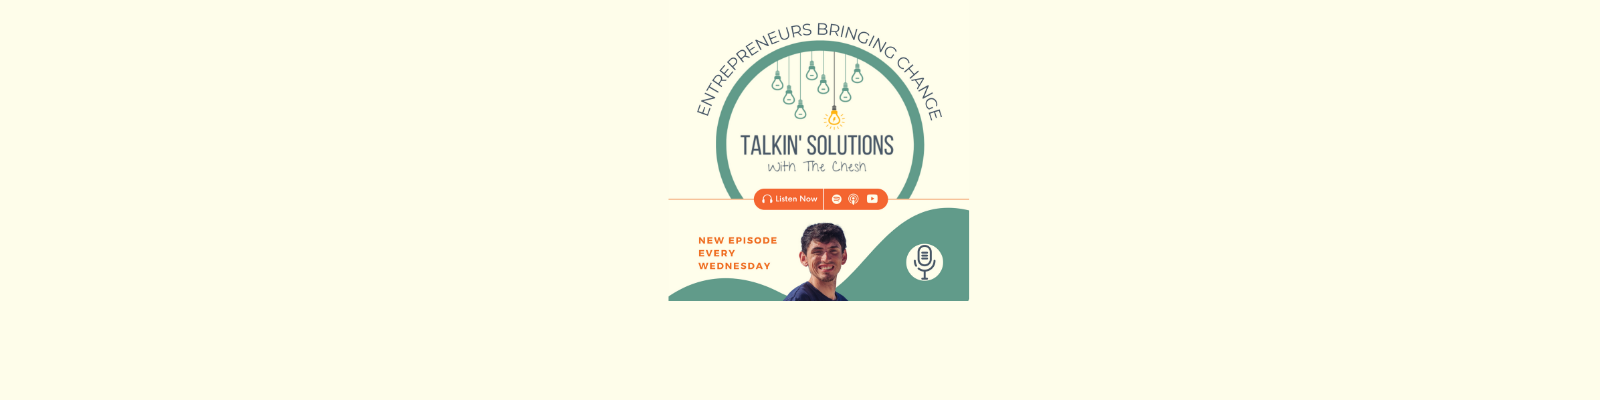 Talkin’ Solutions: Highlighting Impact Driven Companies Doing Societal Good